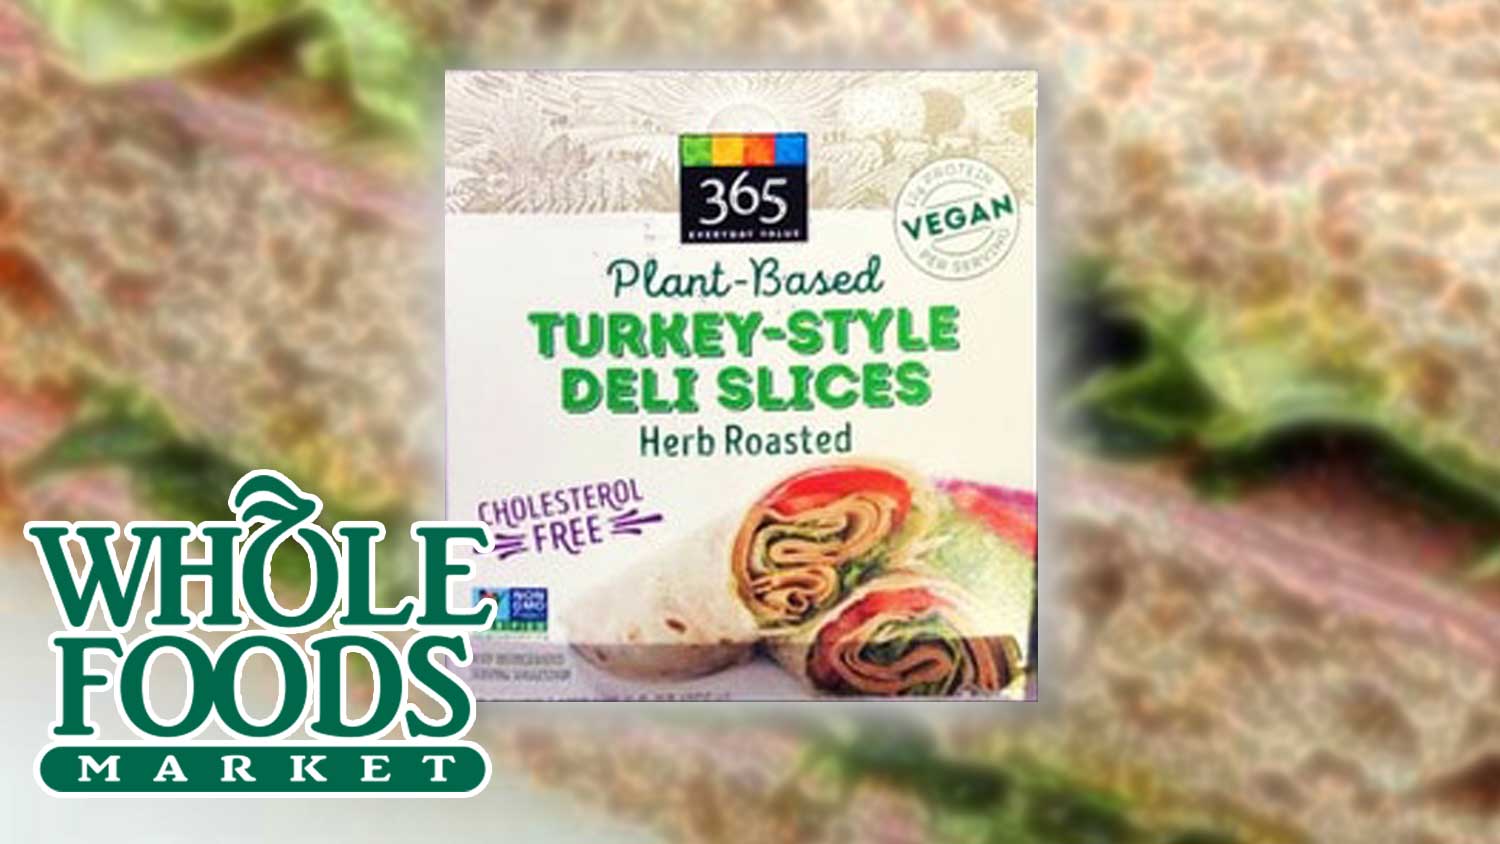 https://s41230.pcdn.co/wp-content/uploads/2019/04/vegan-whole-foods-turkey-slices-livekindly1e.jpg